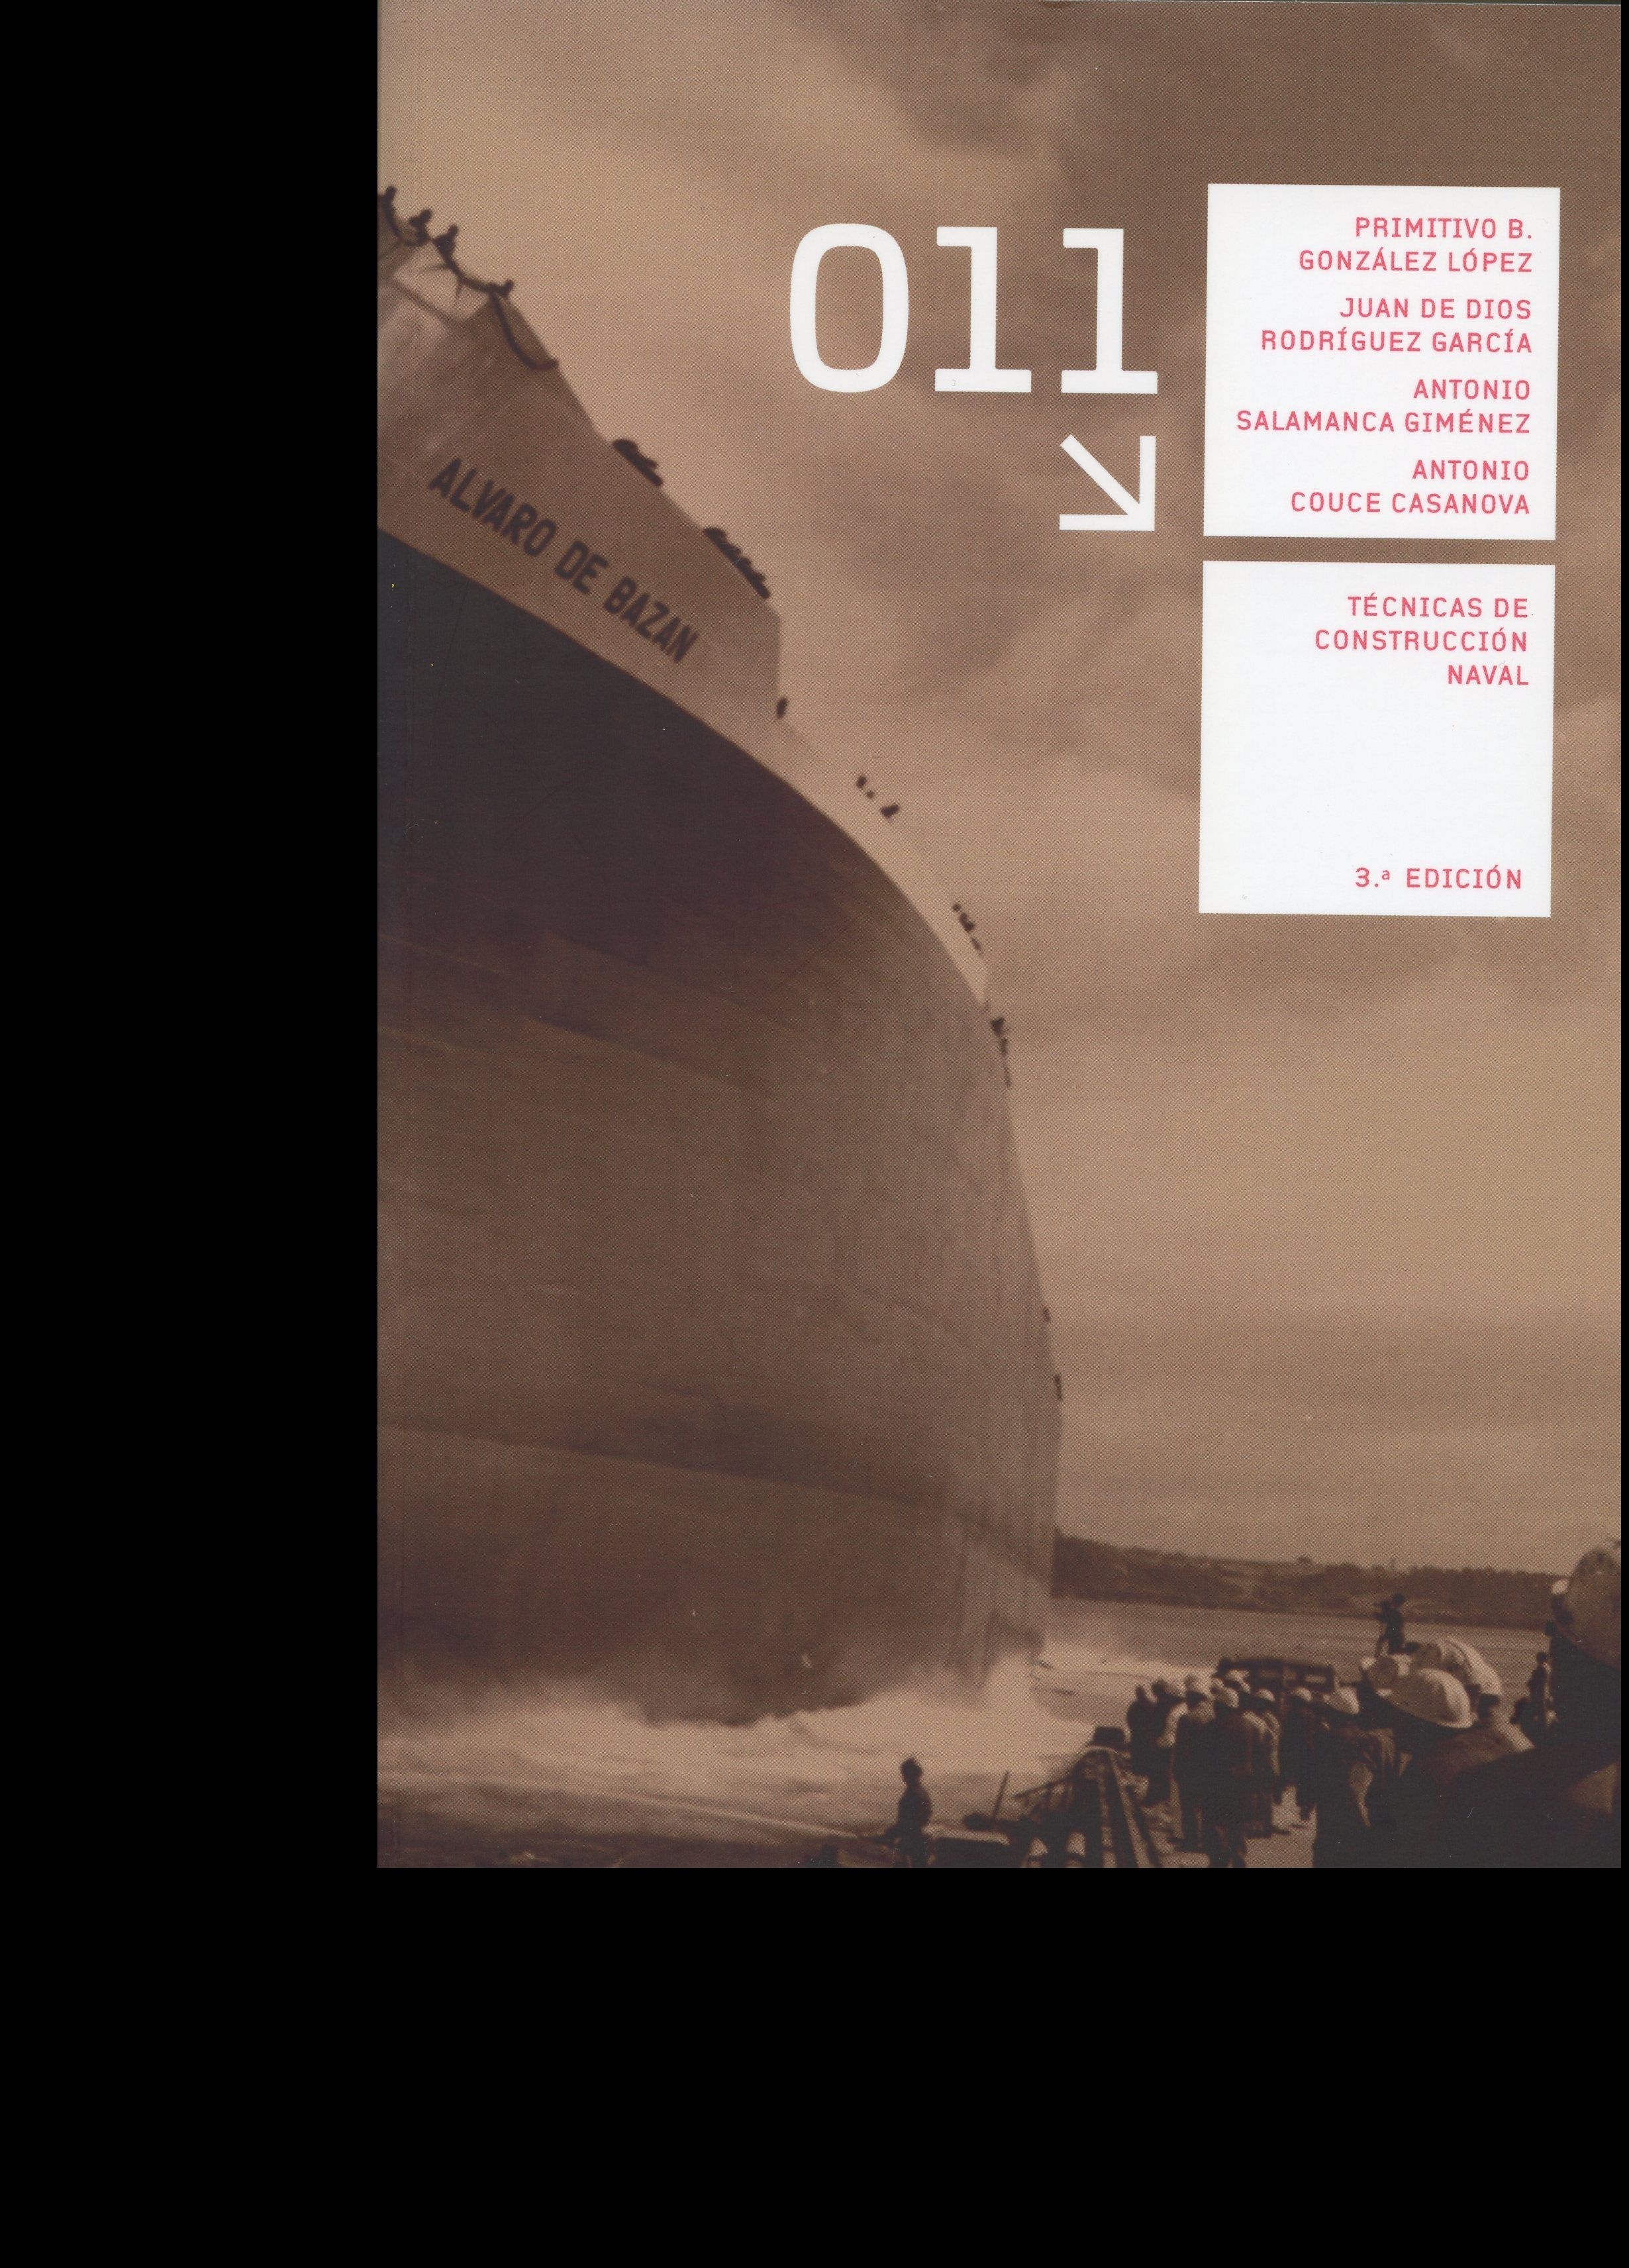 Técnicas de construcción naval (3ª edición)